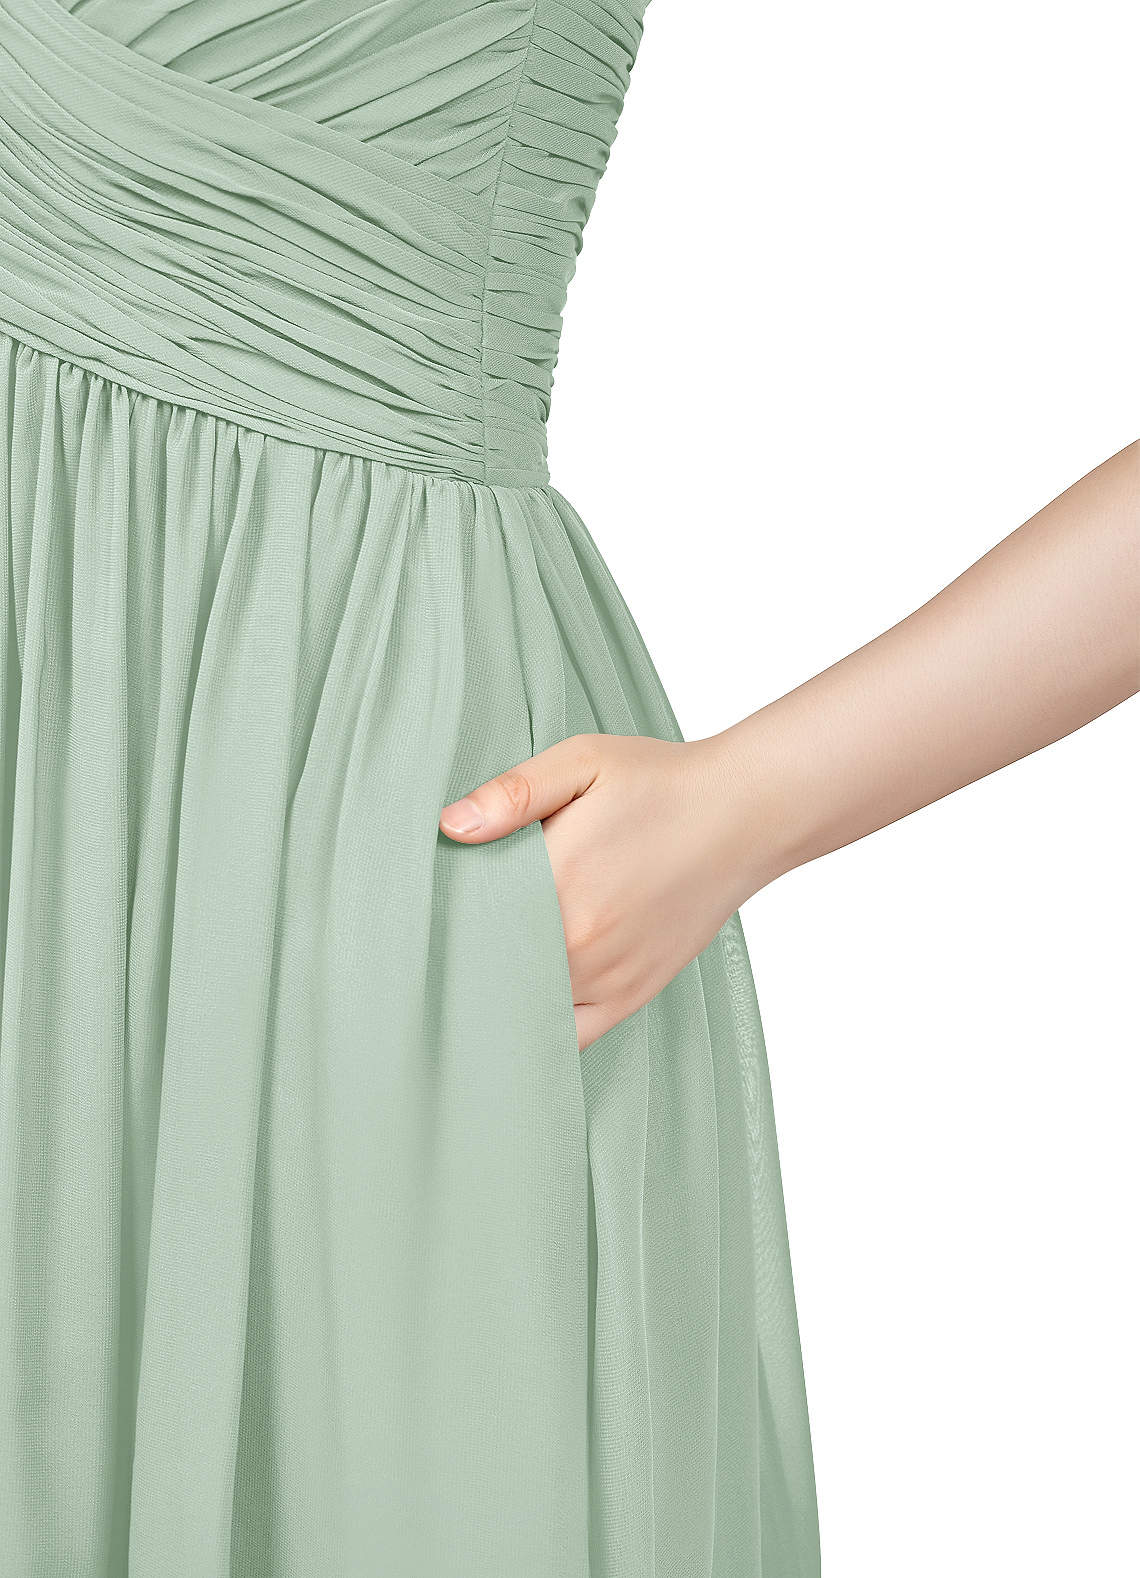 Azazie Angie Bridesmaid Dresses A-Line Pleated Chiffon Knee-Length Dress image1